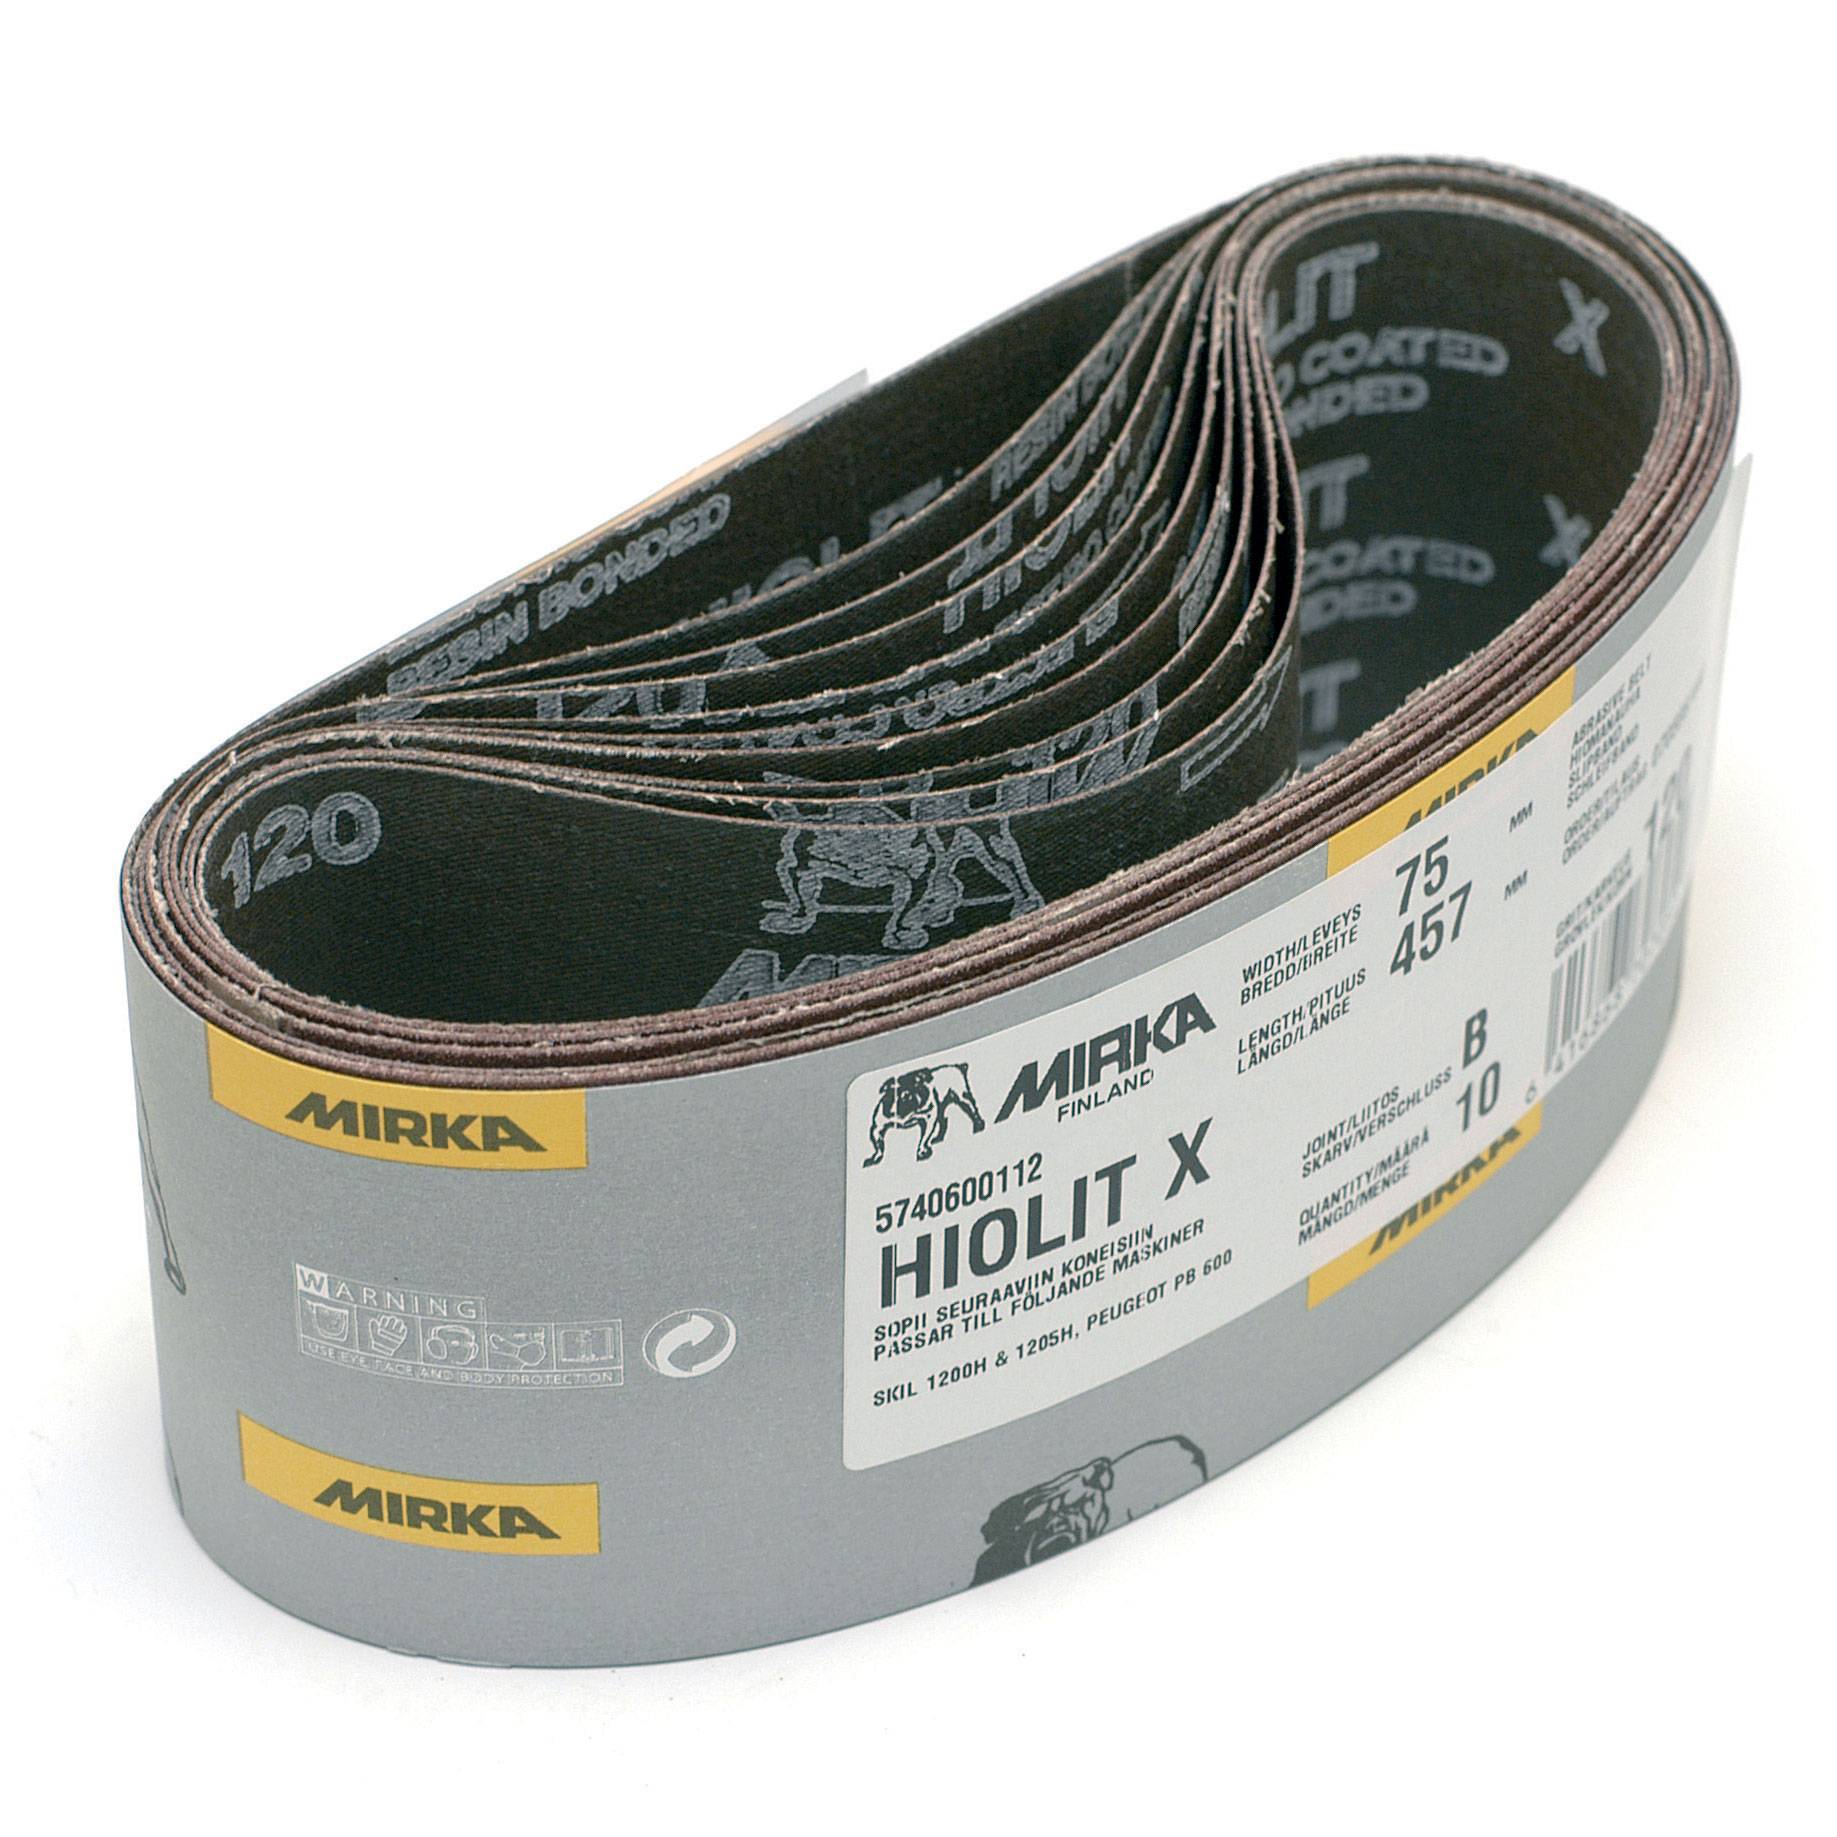 Hiolit Xo Portable Abrasive Belt (tape Joint), 60 Grit, 10 Belts/box